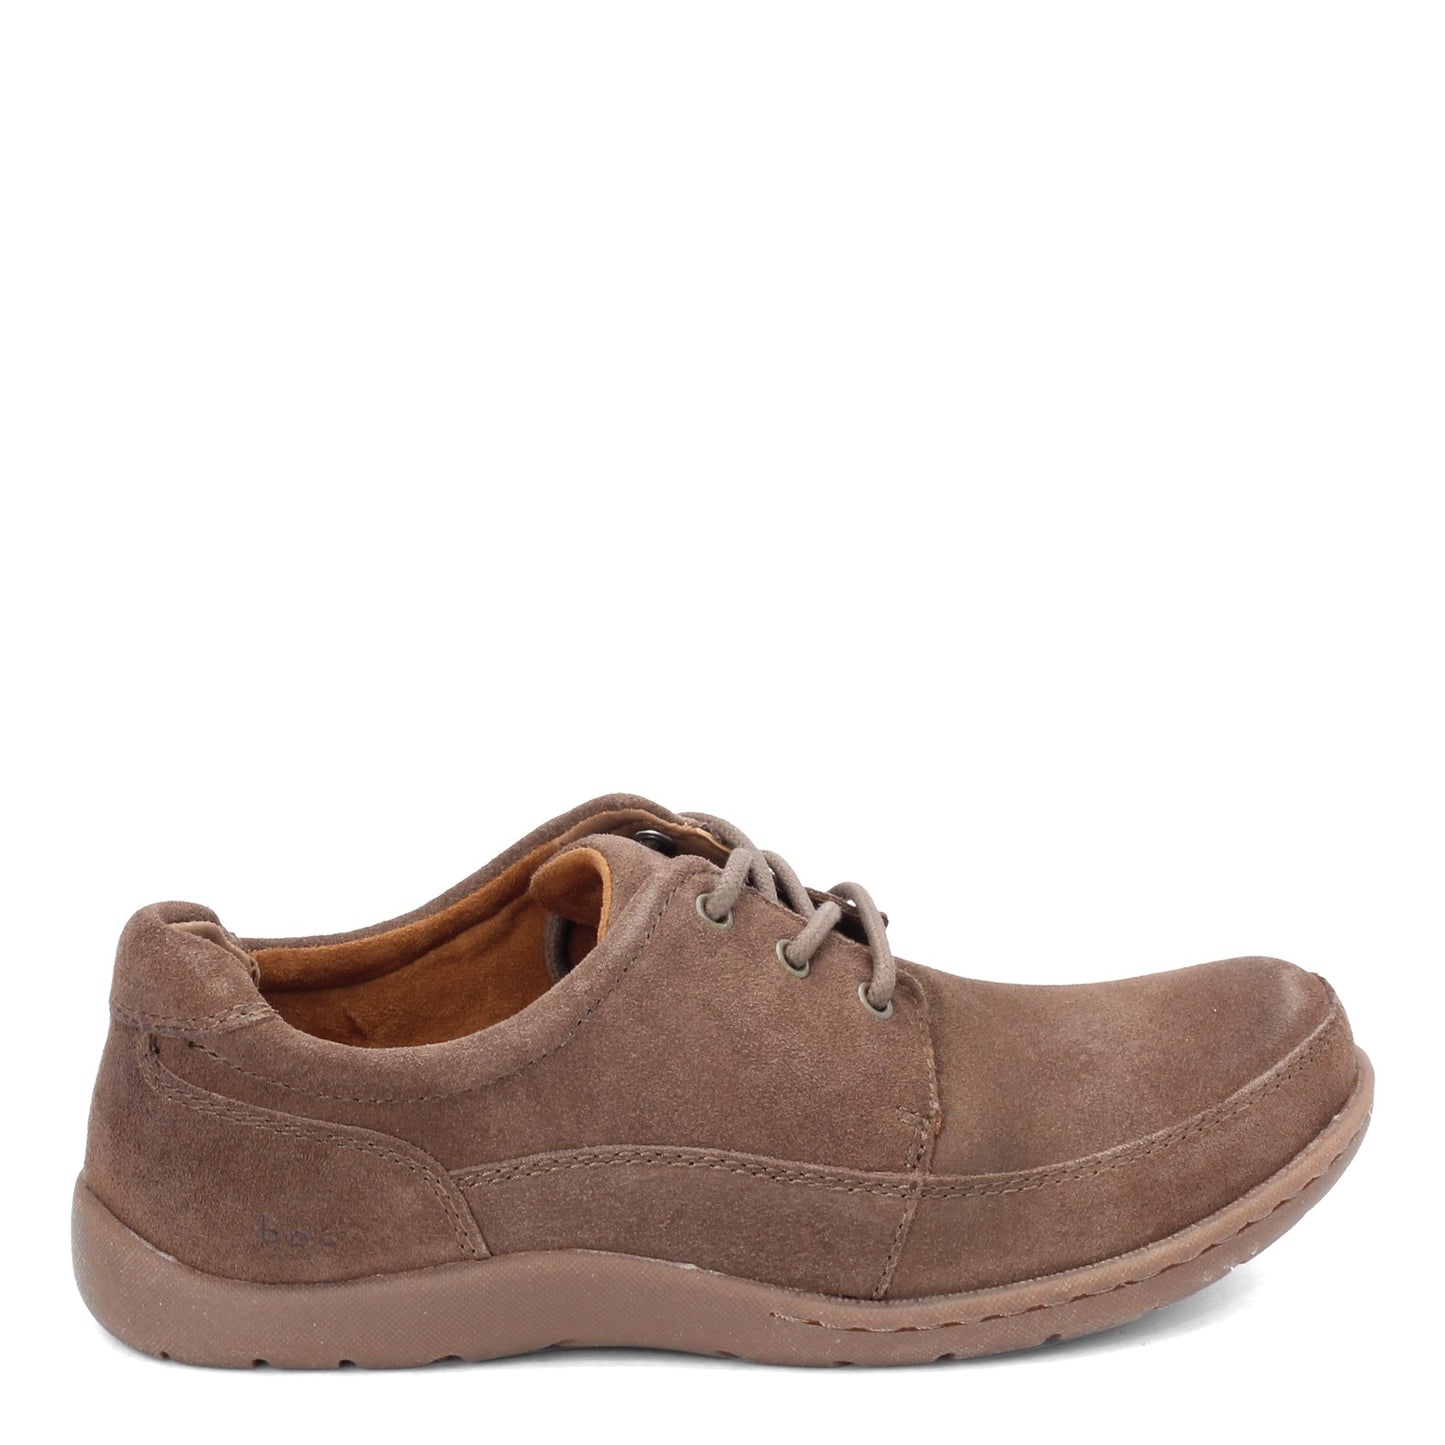 Peltz Shoes  Men's b.o.c Gustaf Oxford TAN SUEDE A06117